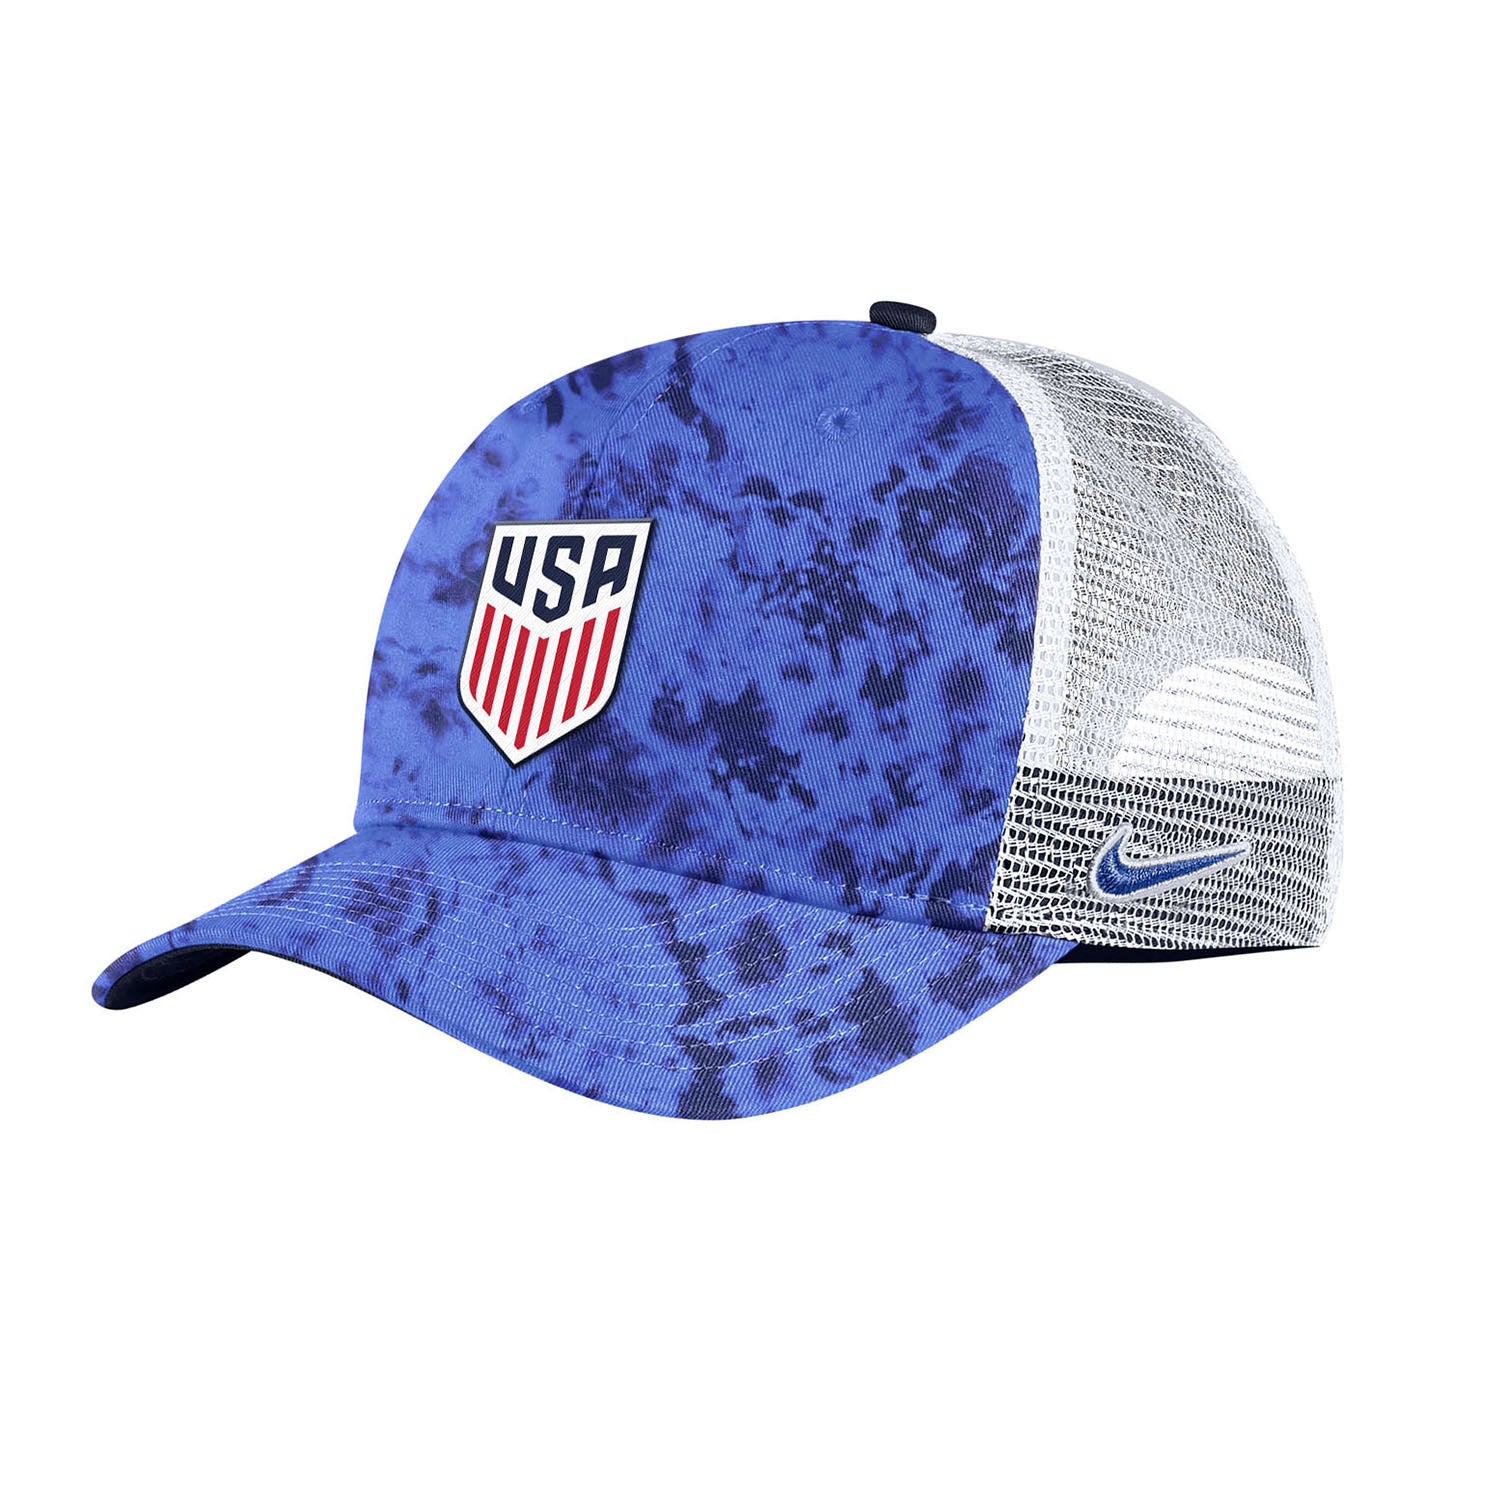 Men's Nike USA Snapback - Official U.S. Soccer Store